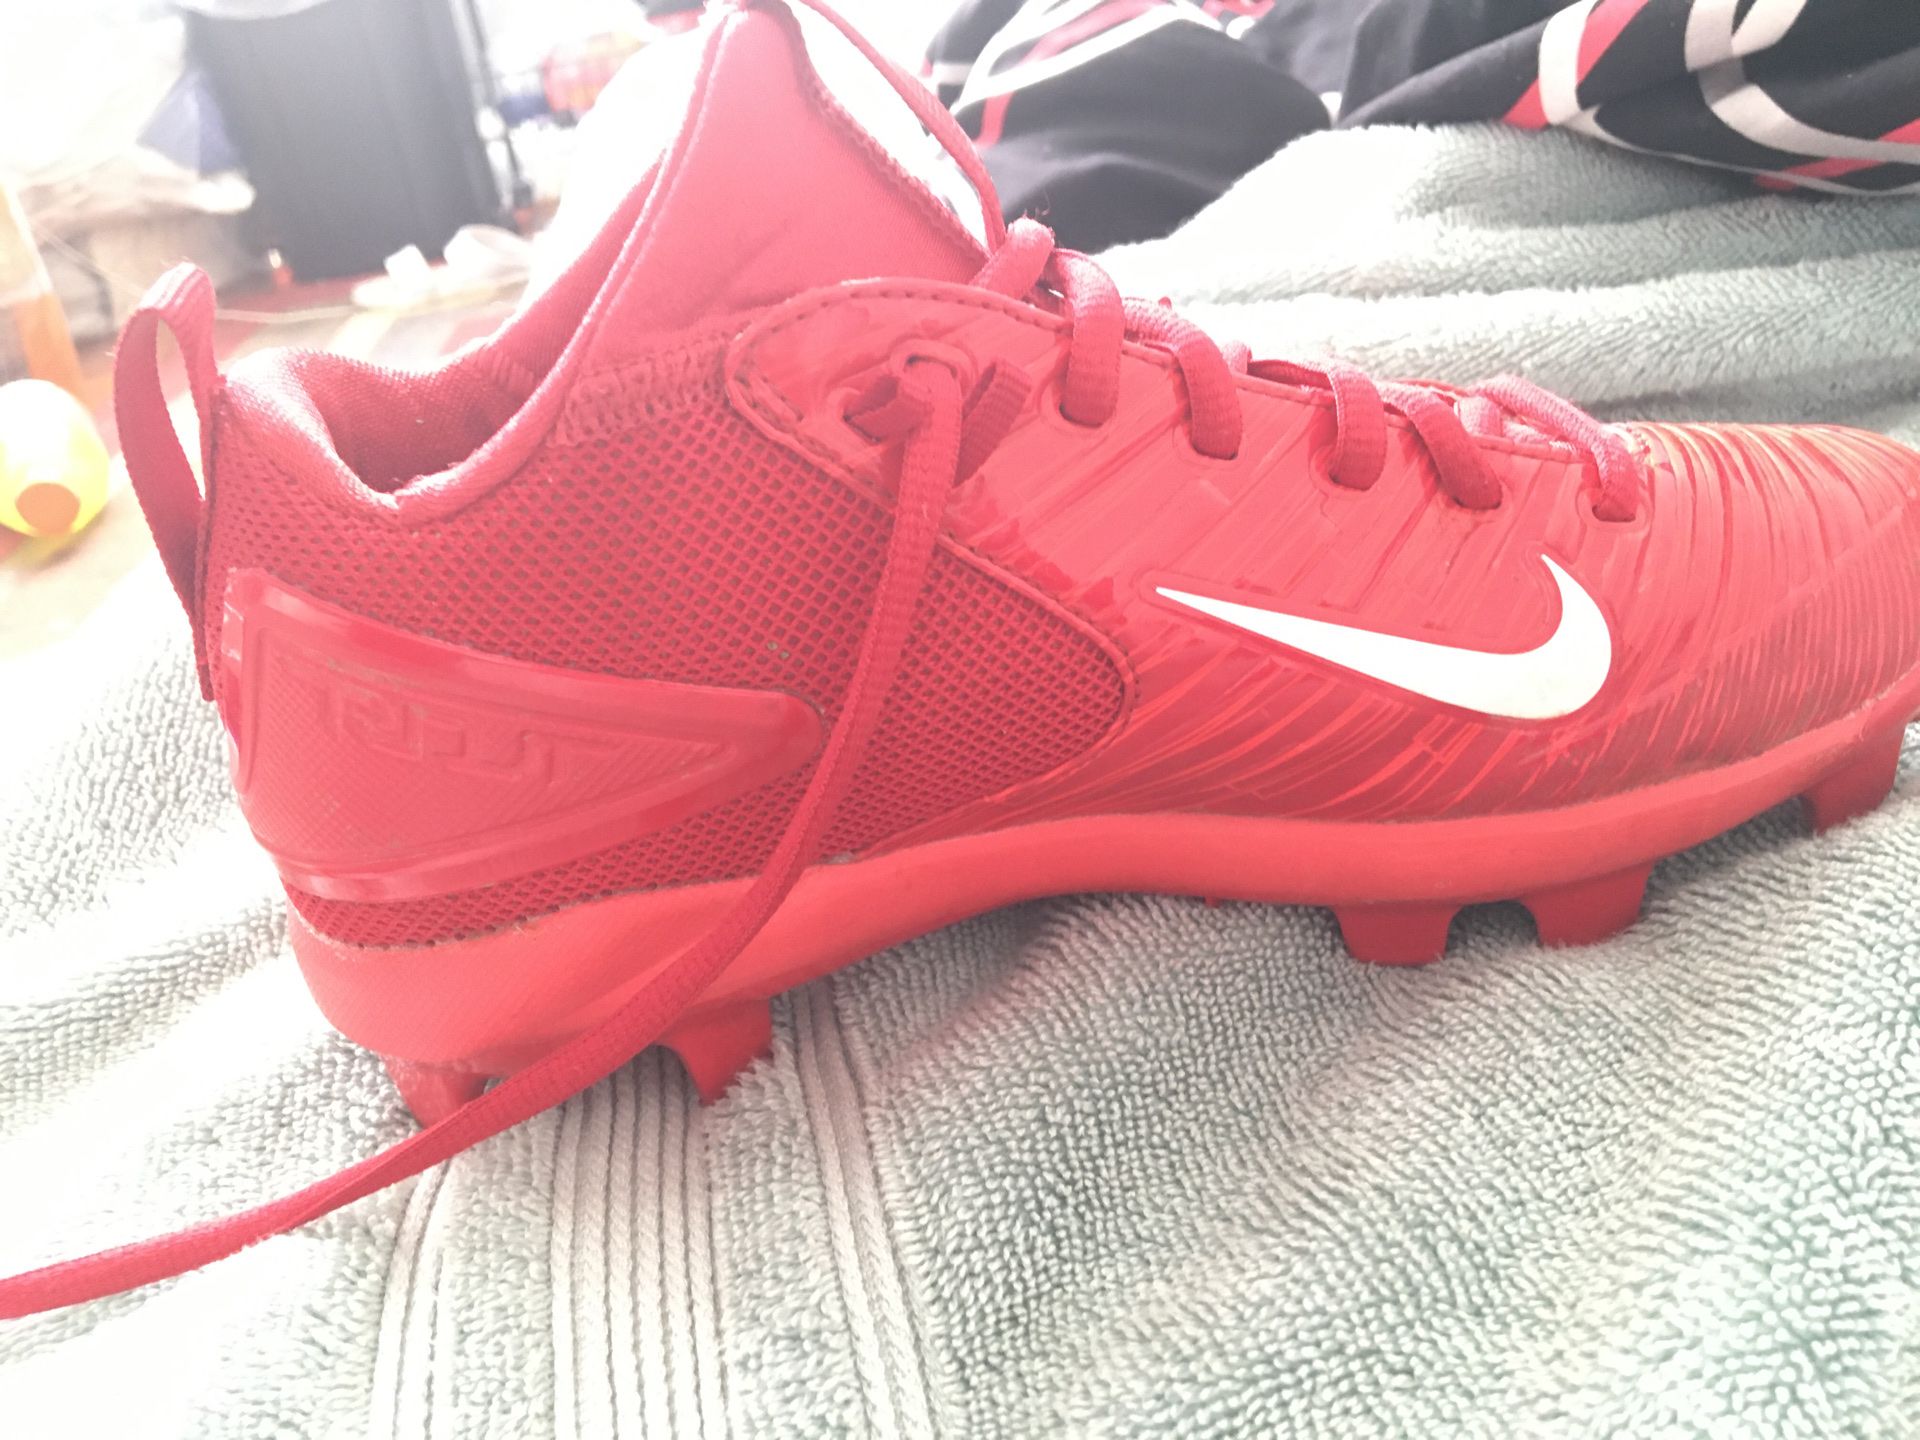 Nike Football/Soccer shoes